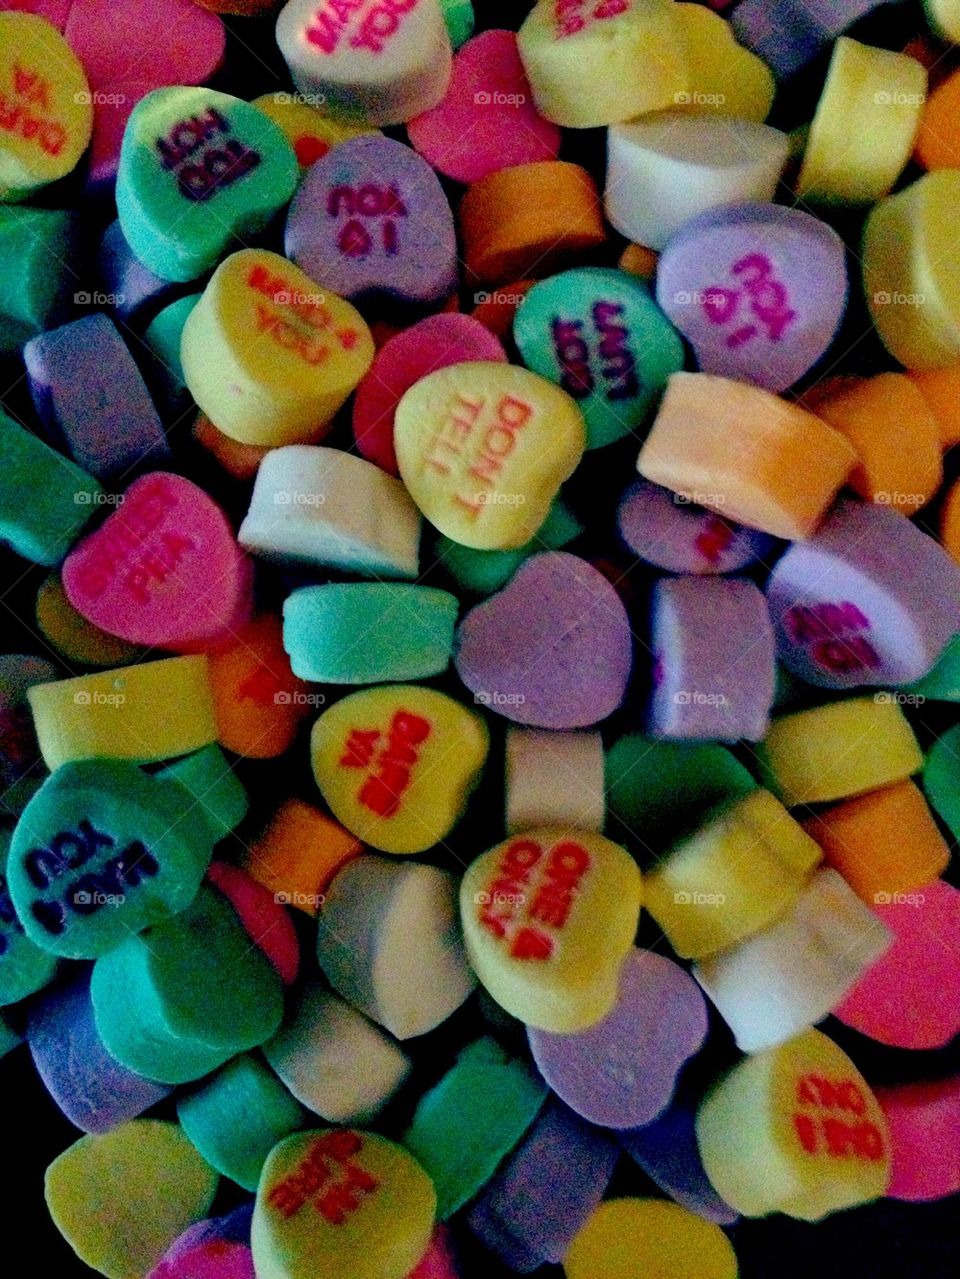 Valentine's Day candy